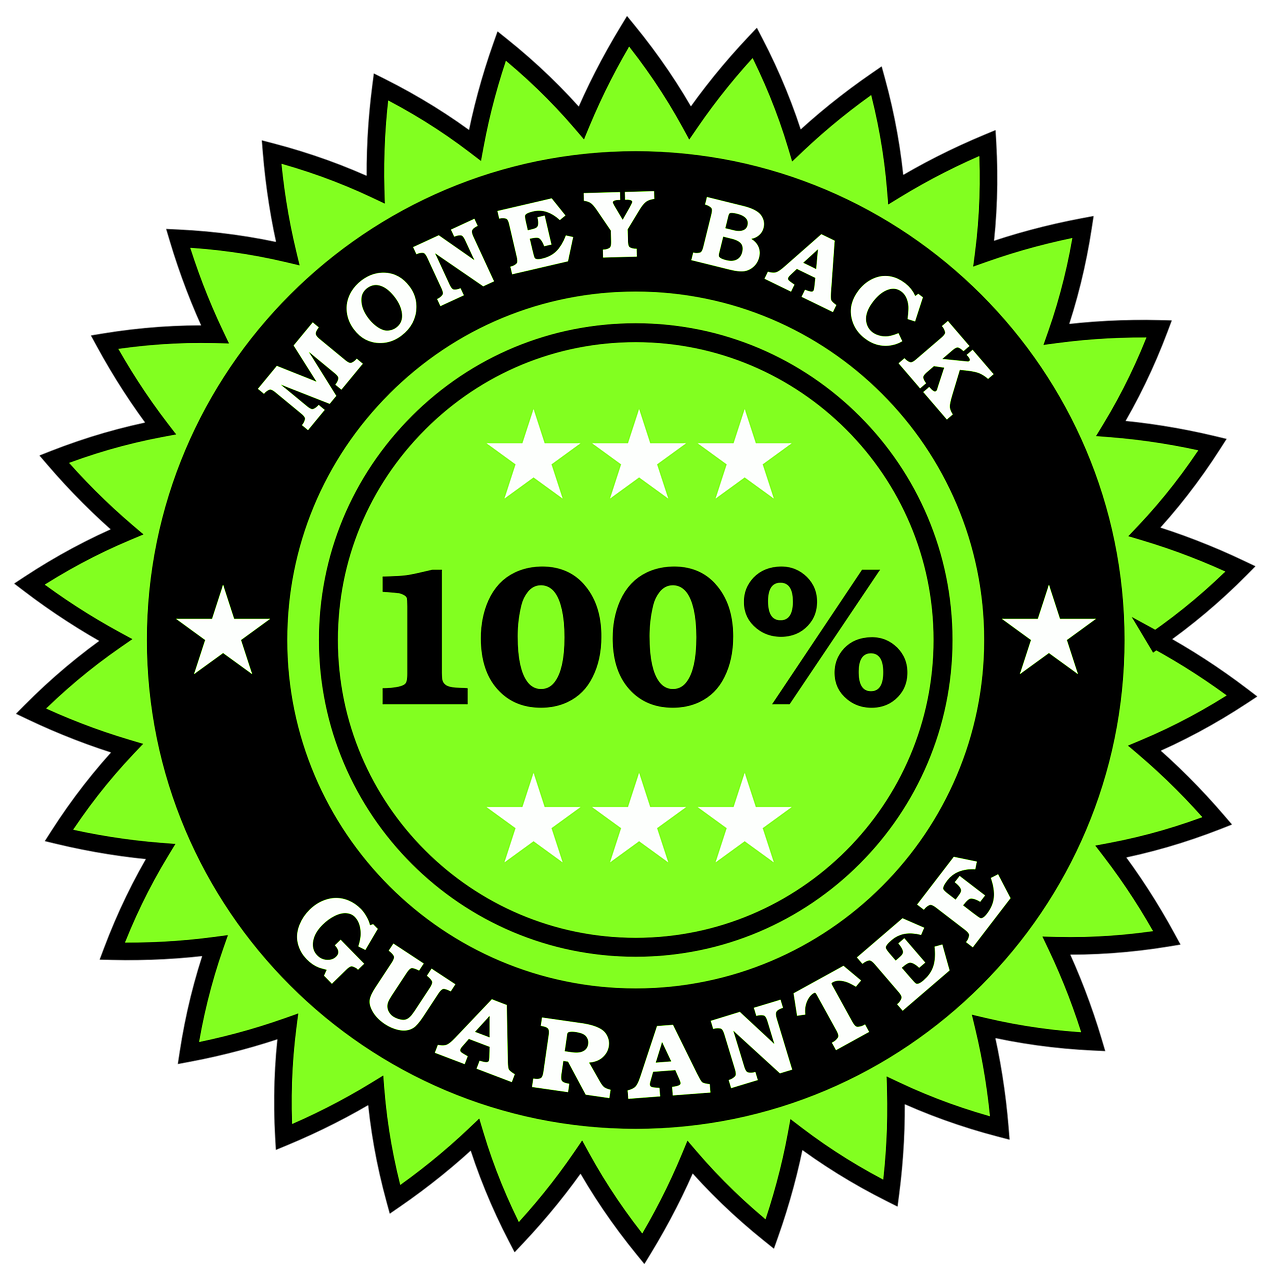 money back guarantee free photo